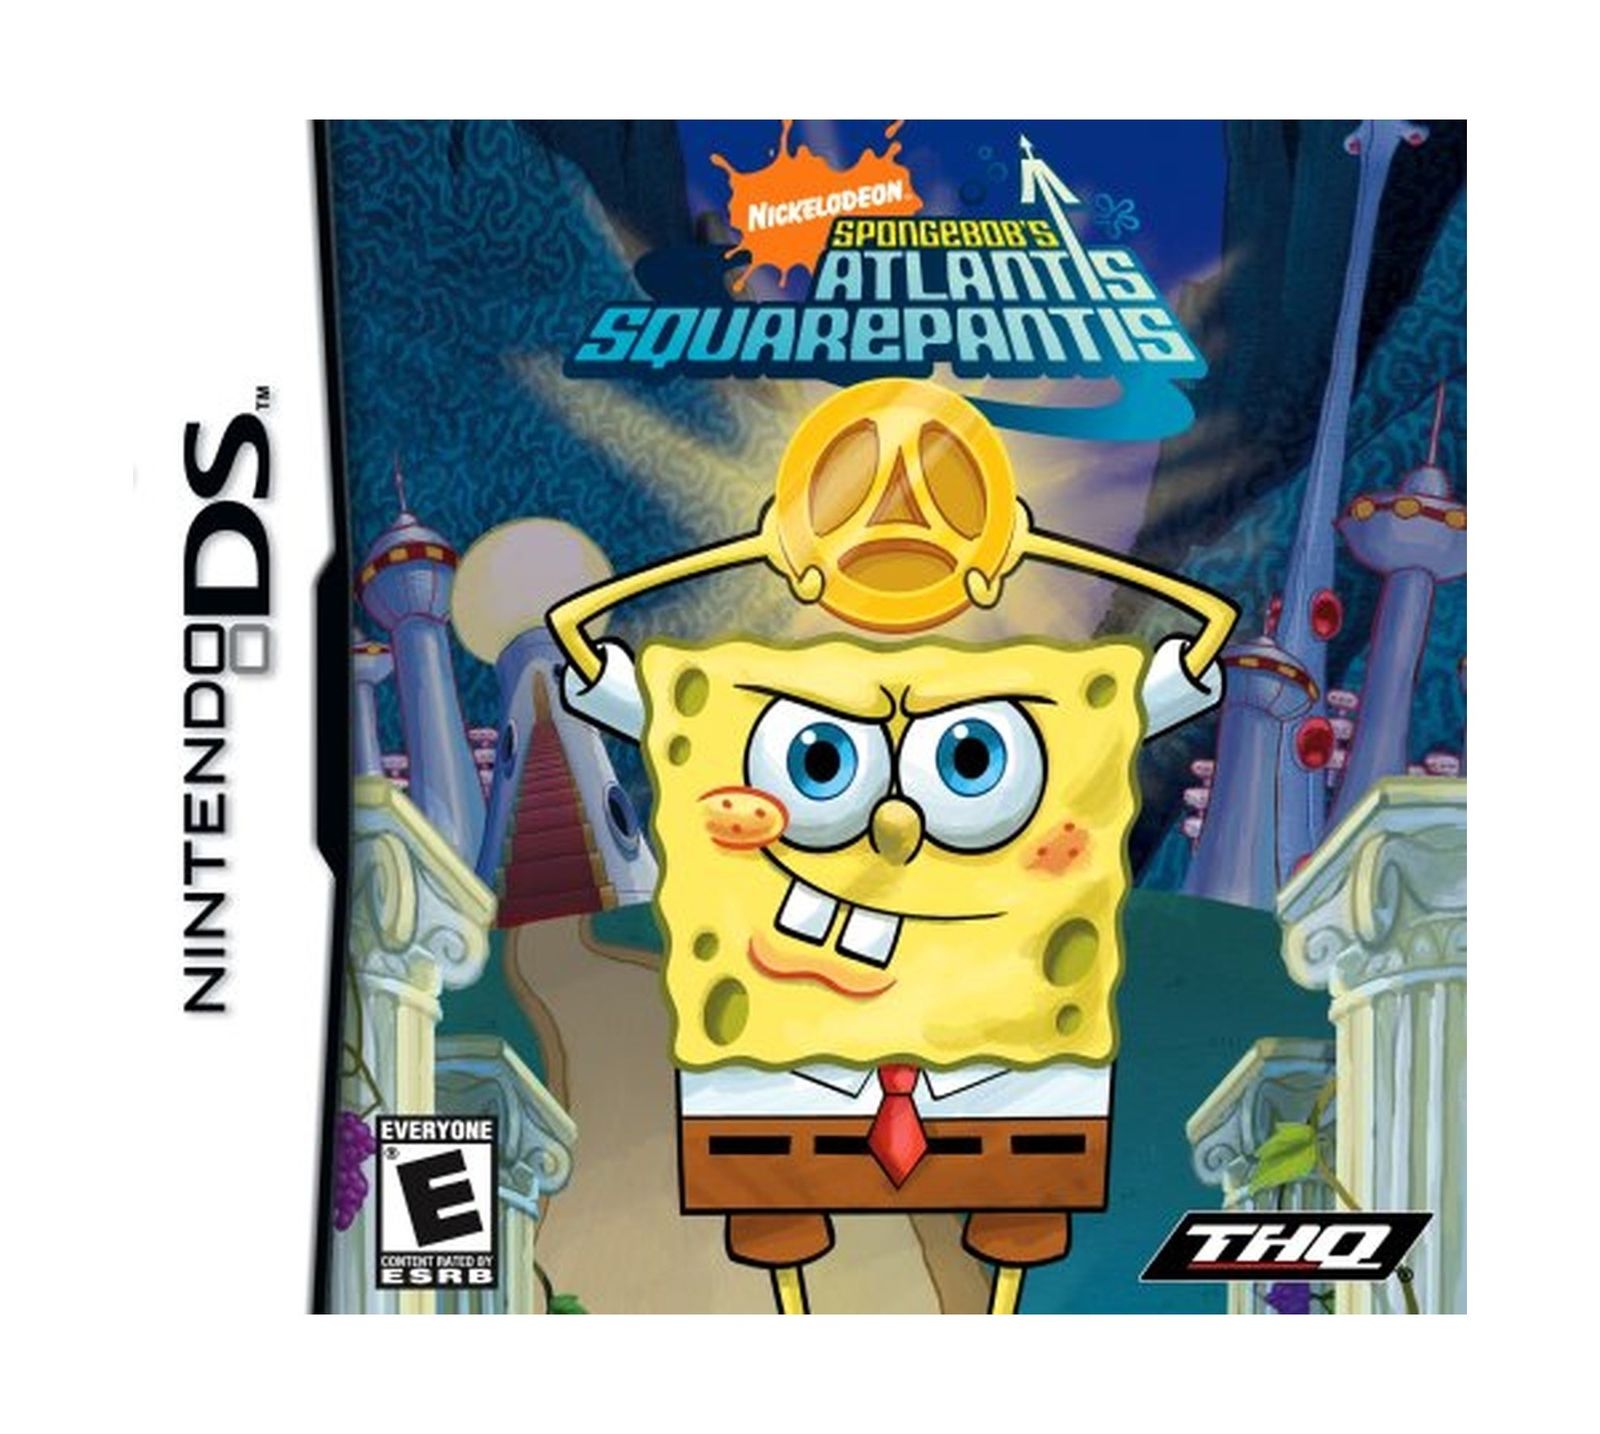 Nickelodeon Spongebobs Atlantis Squarepantis - Nintendo DS Játékok